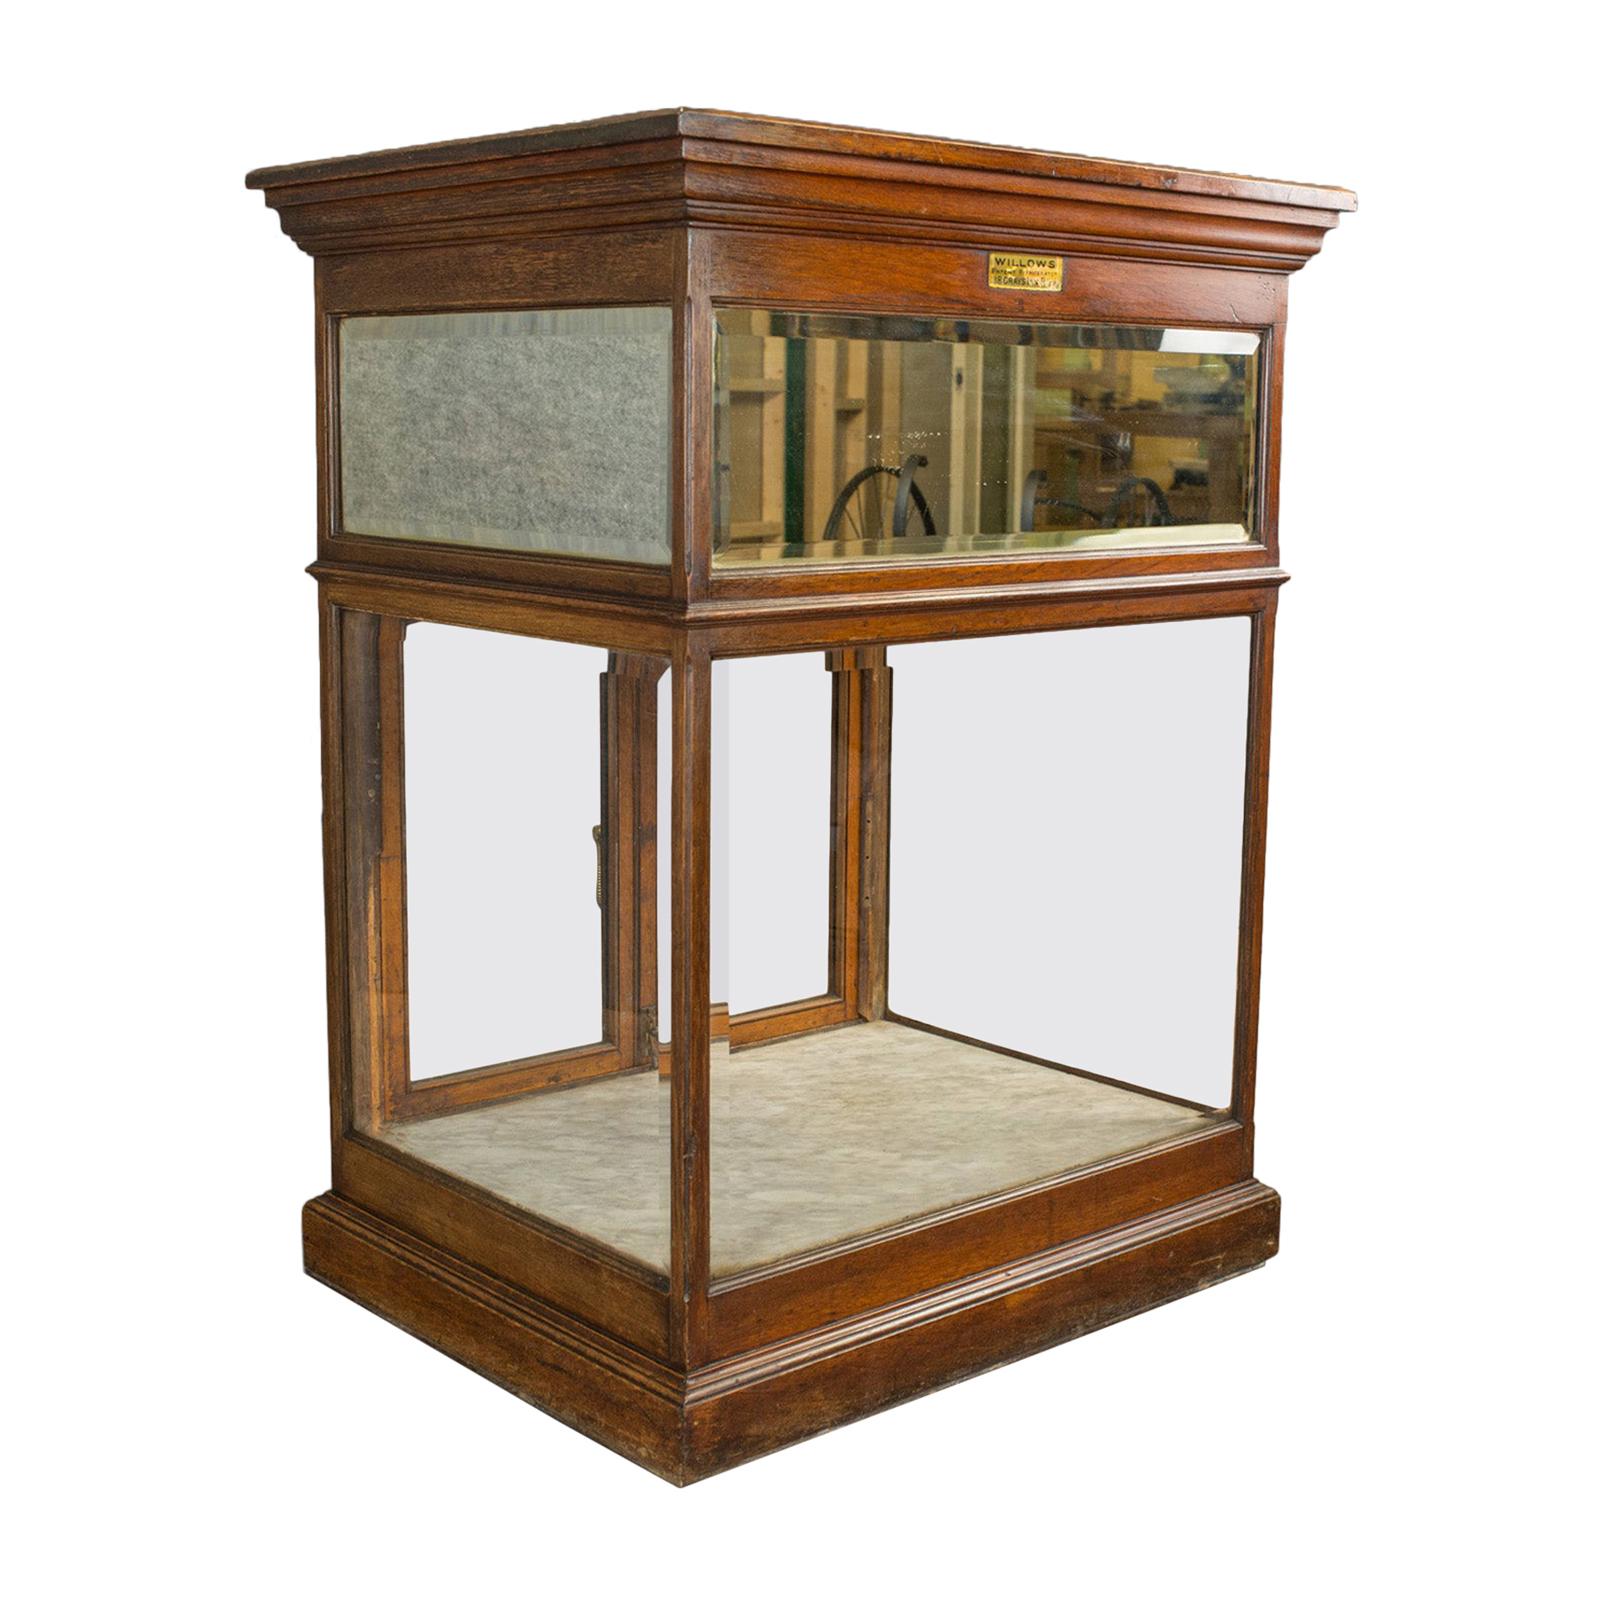 Antique Shop Display Cabinet, English, Edward Willows, Patented, circa 1905